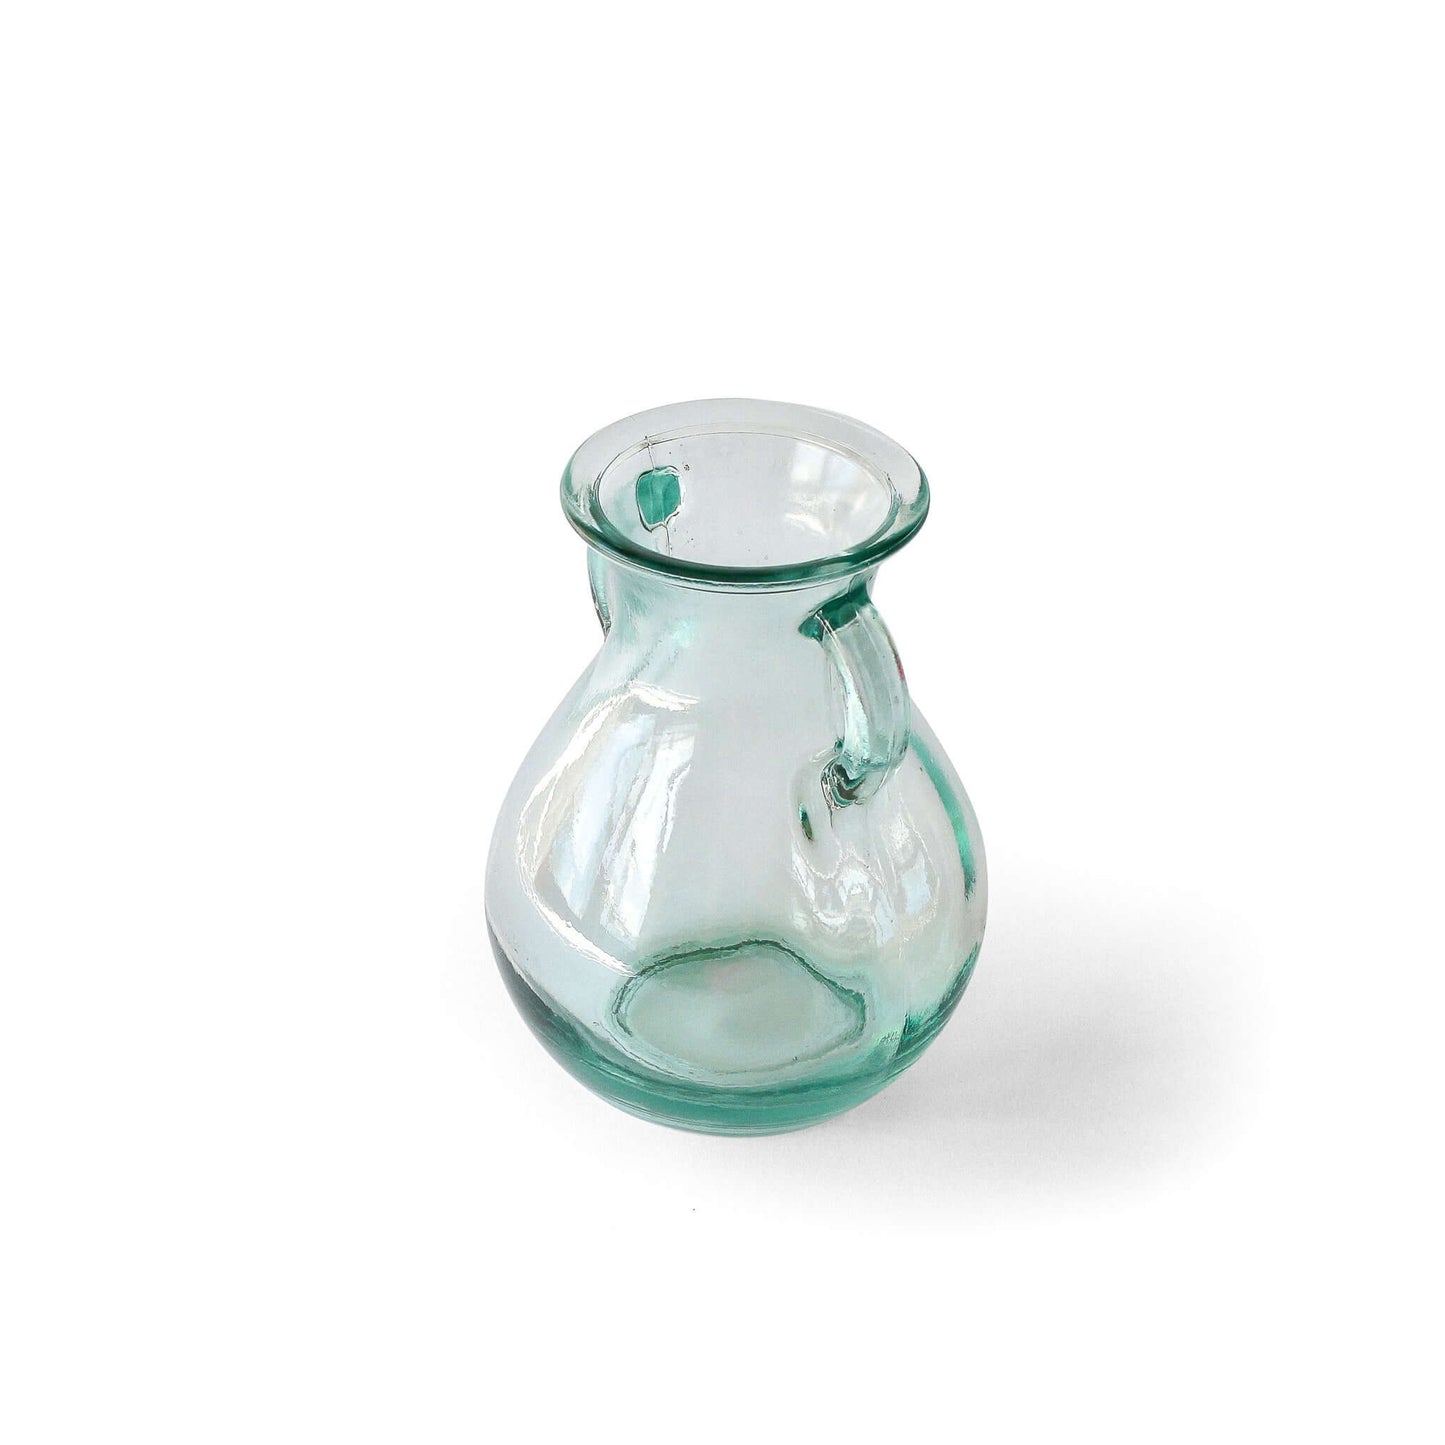 100% Recycled Spanish Handle Vase